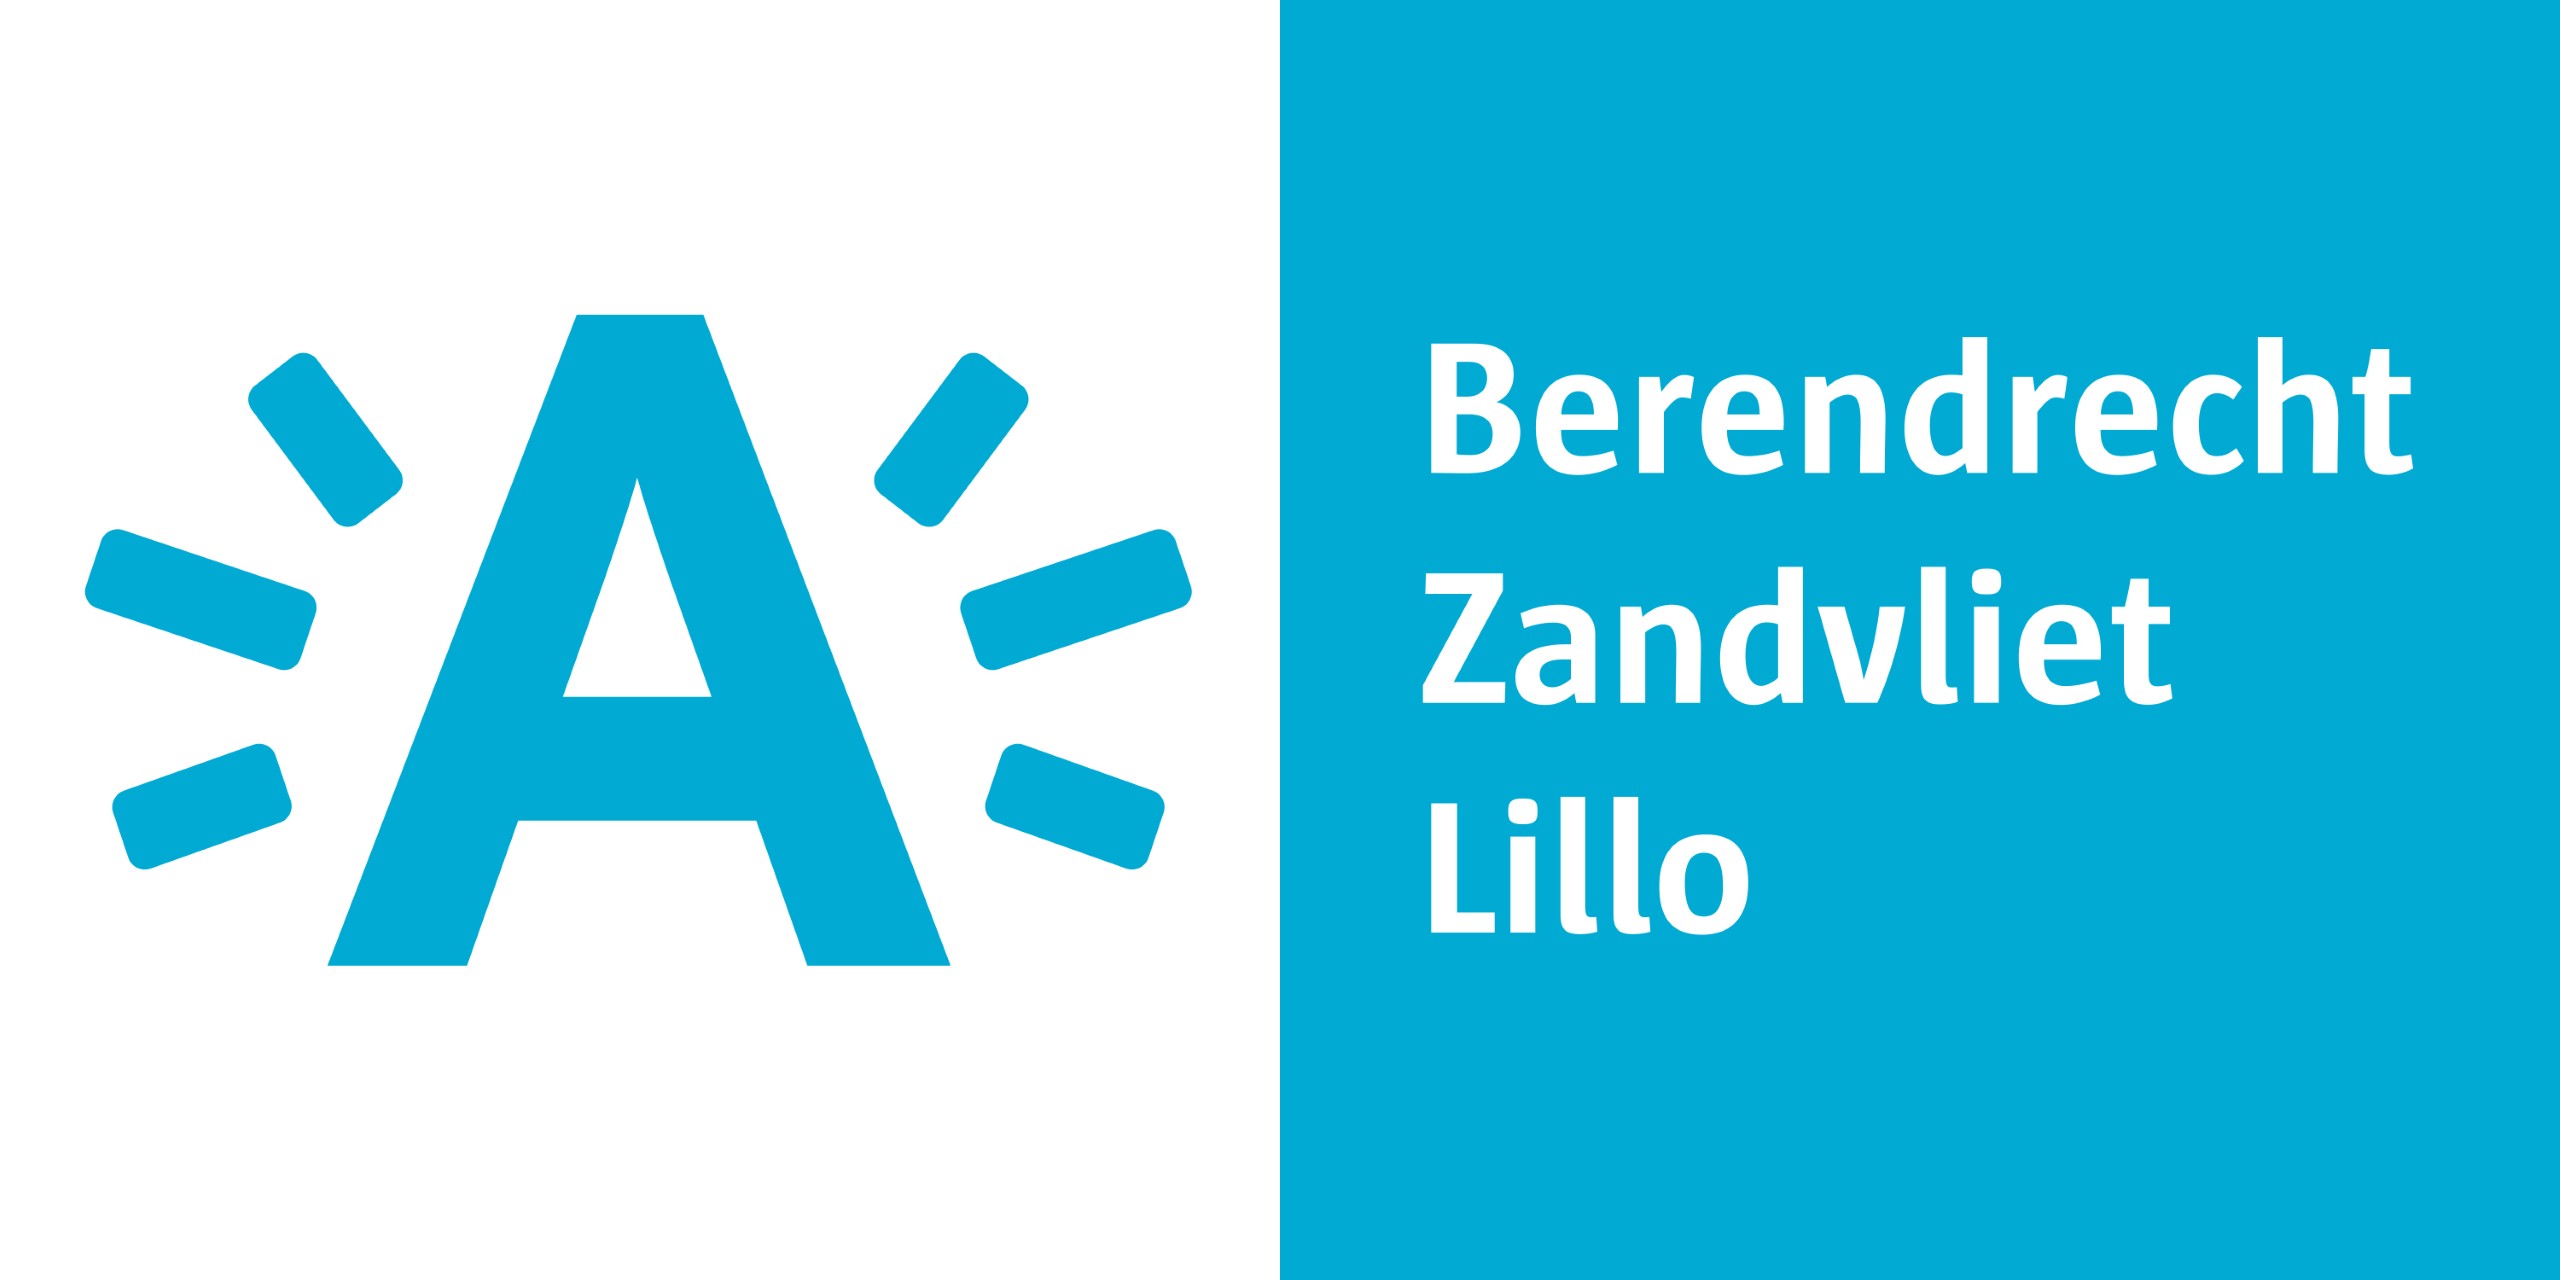 District Berendrecht Zandvliet Lillo